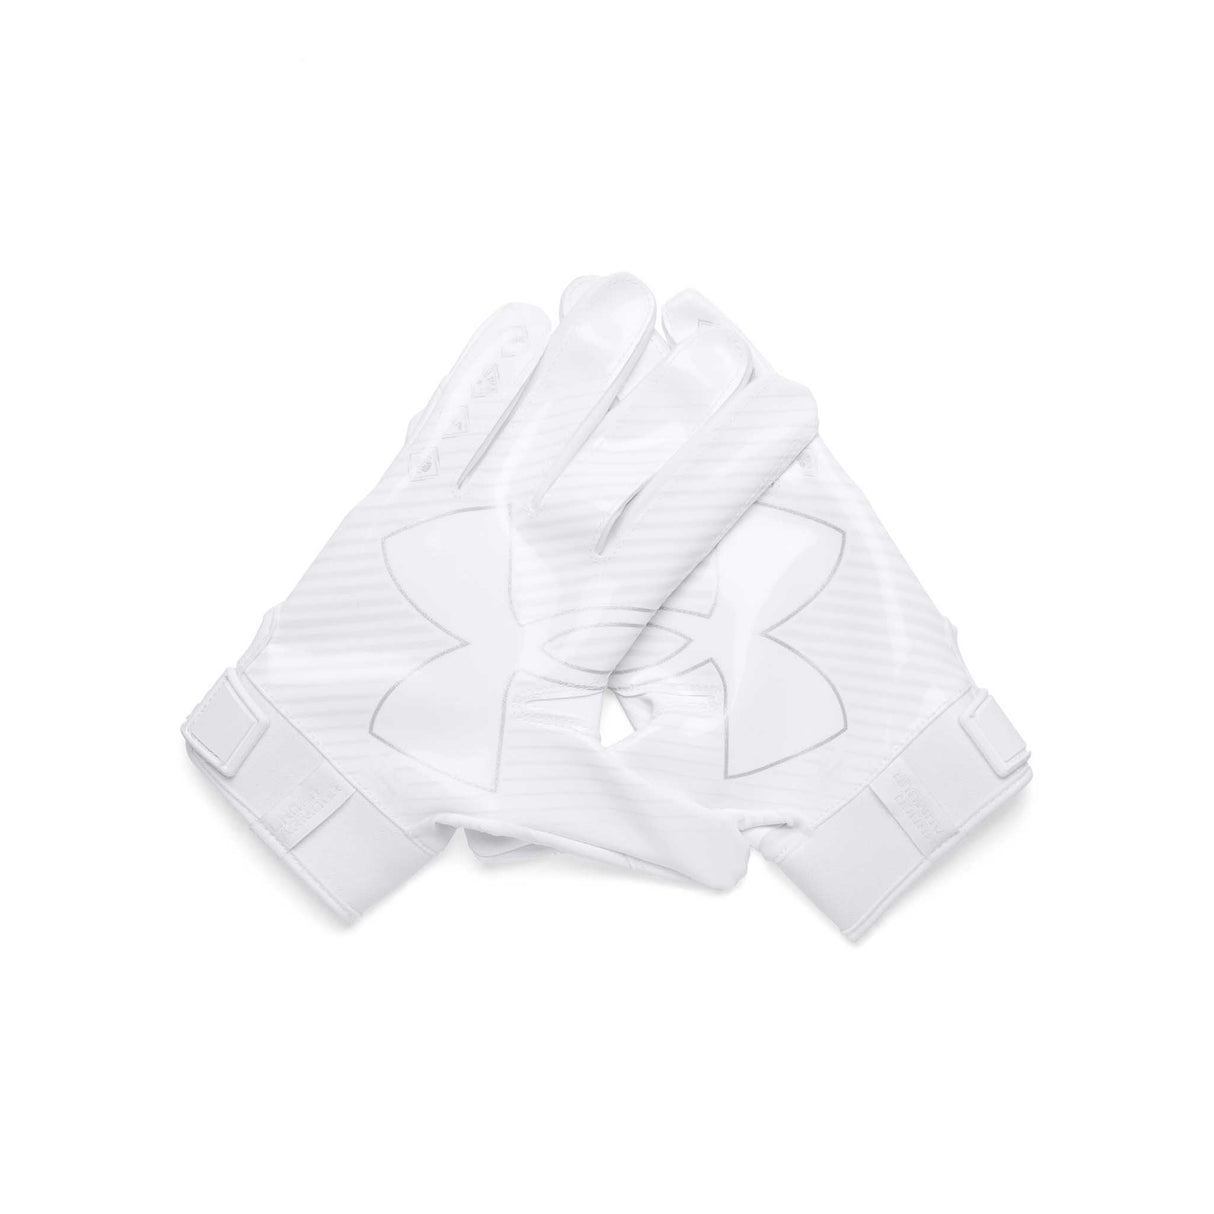 UA F9 Nitro gants de football américain paume -White / Distant Gray / Metallic Silver